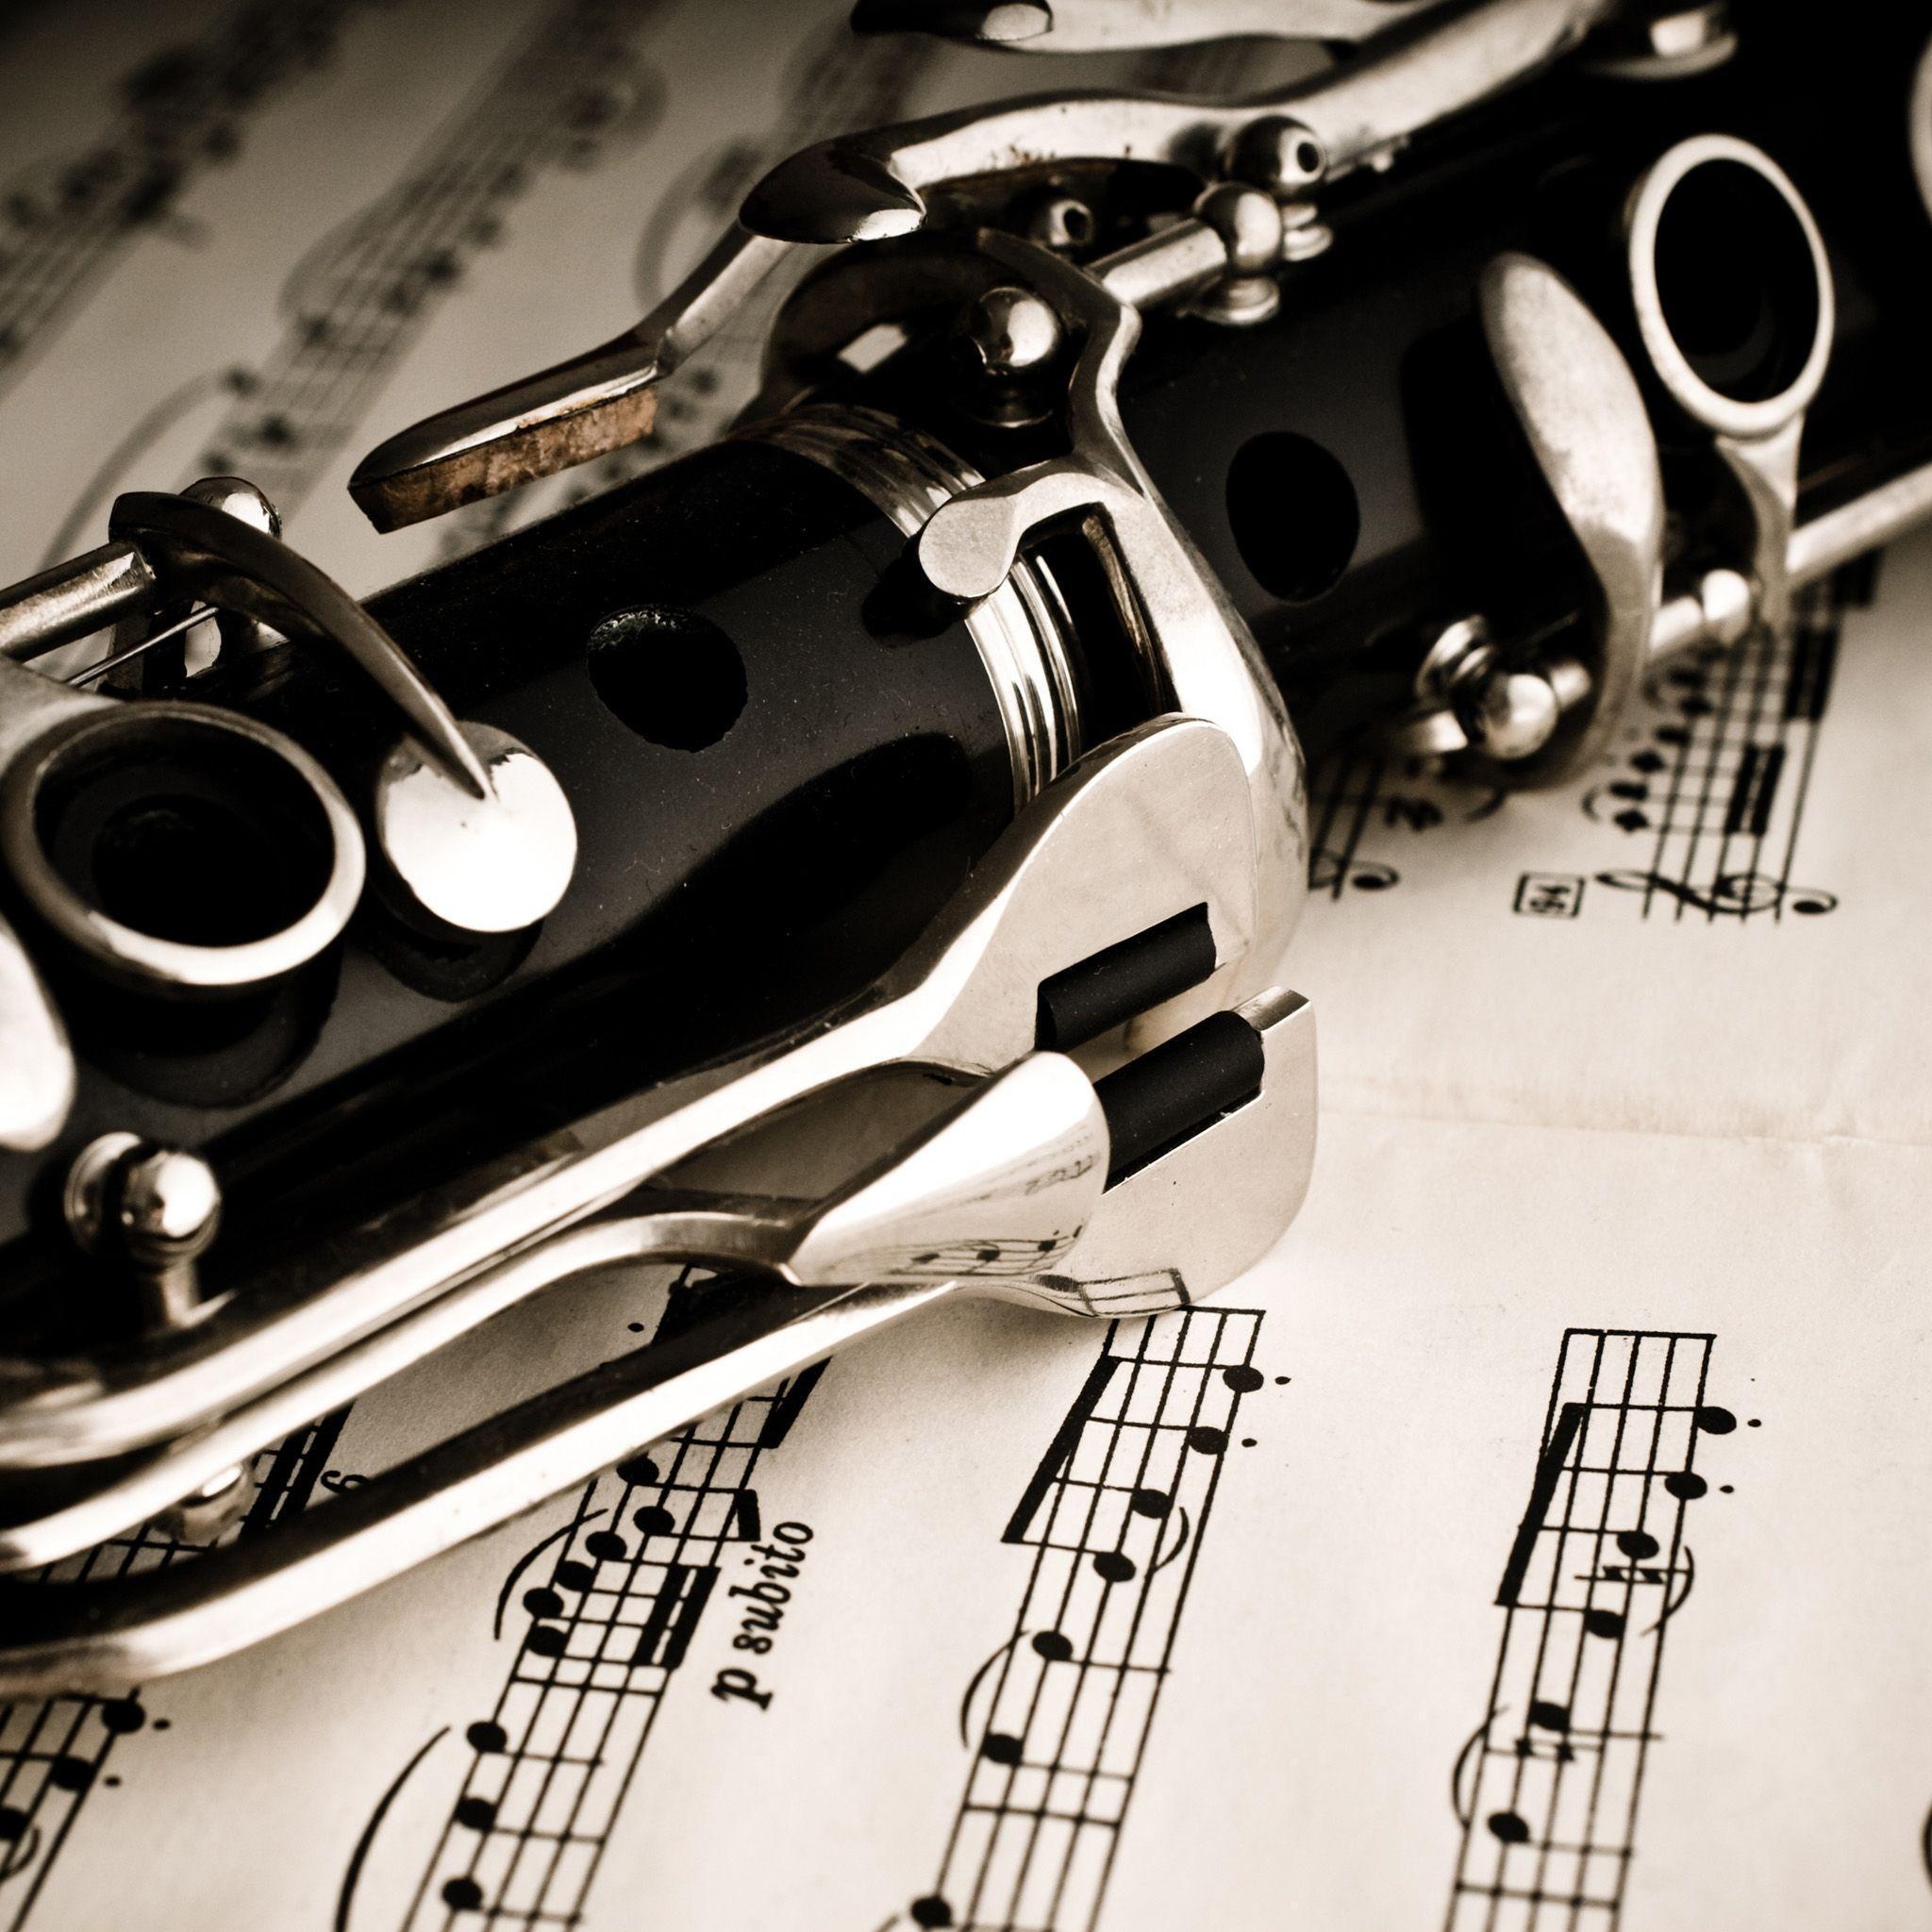 Clarinet: Keys, Warm tone and expressive capabilities, A versatile woodwind instrument. 2050x2050 HD Wallpaper.